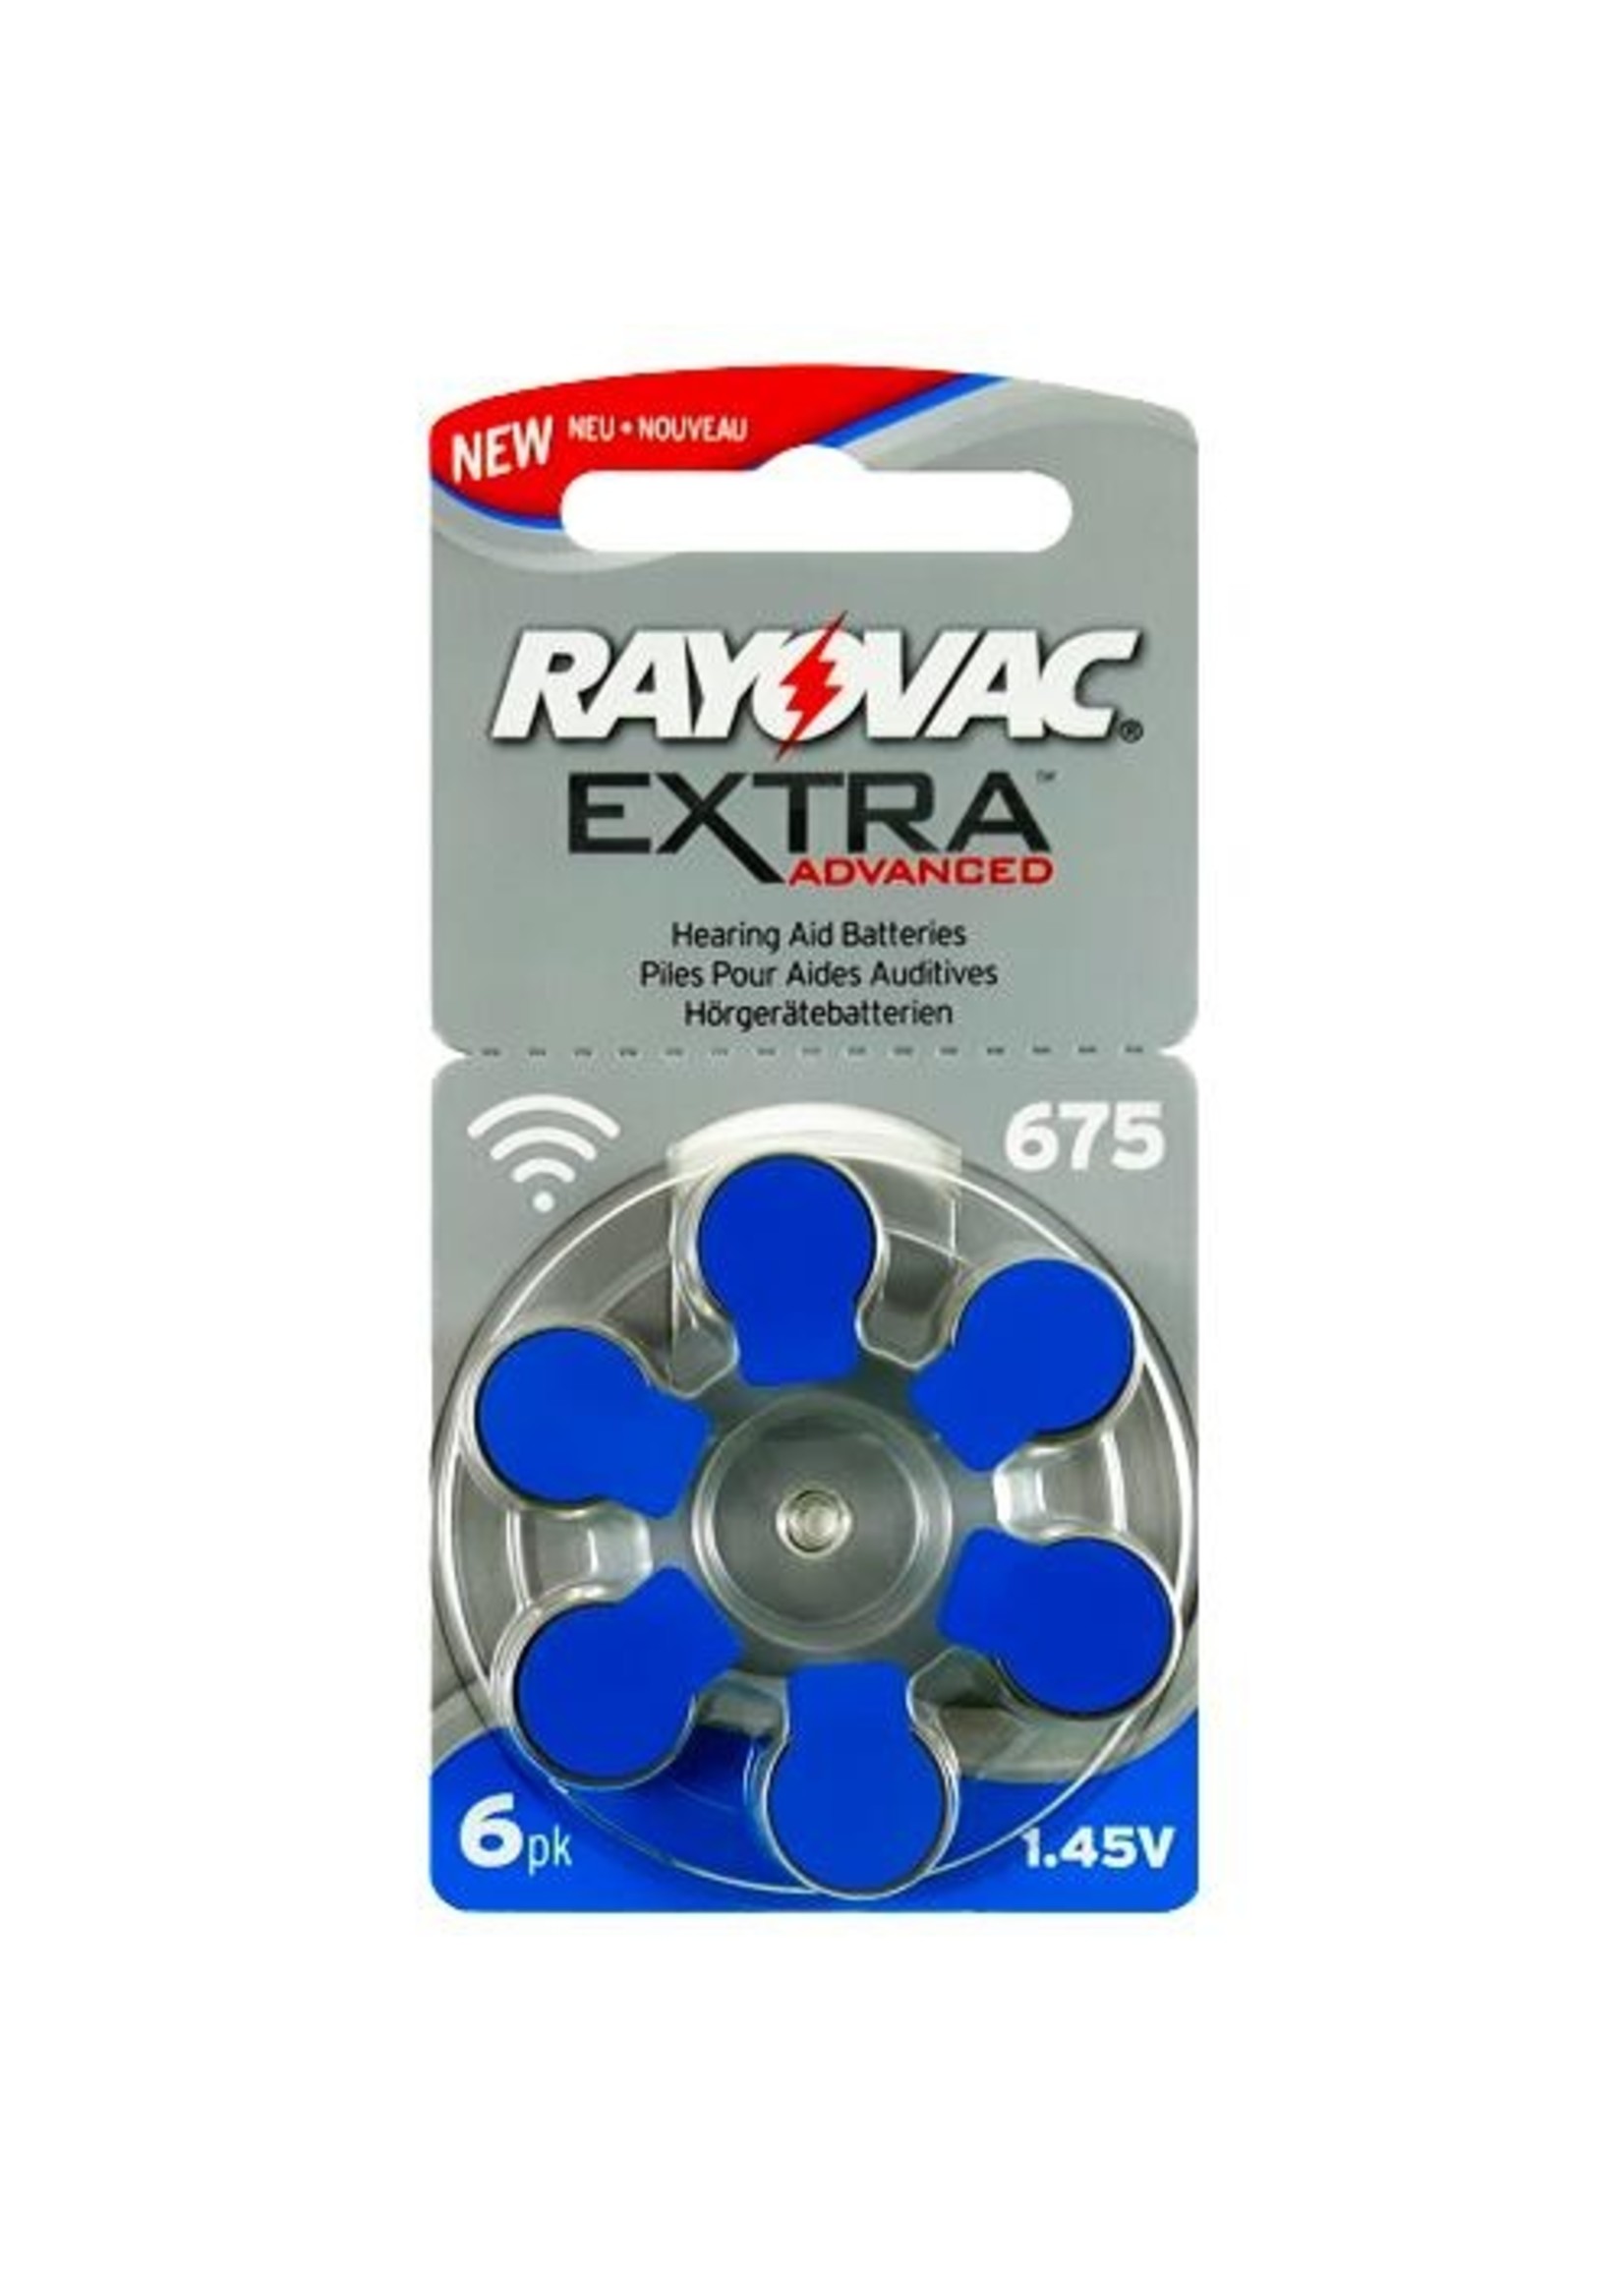 Rayovac 675hearing aid batteries